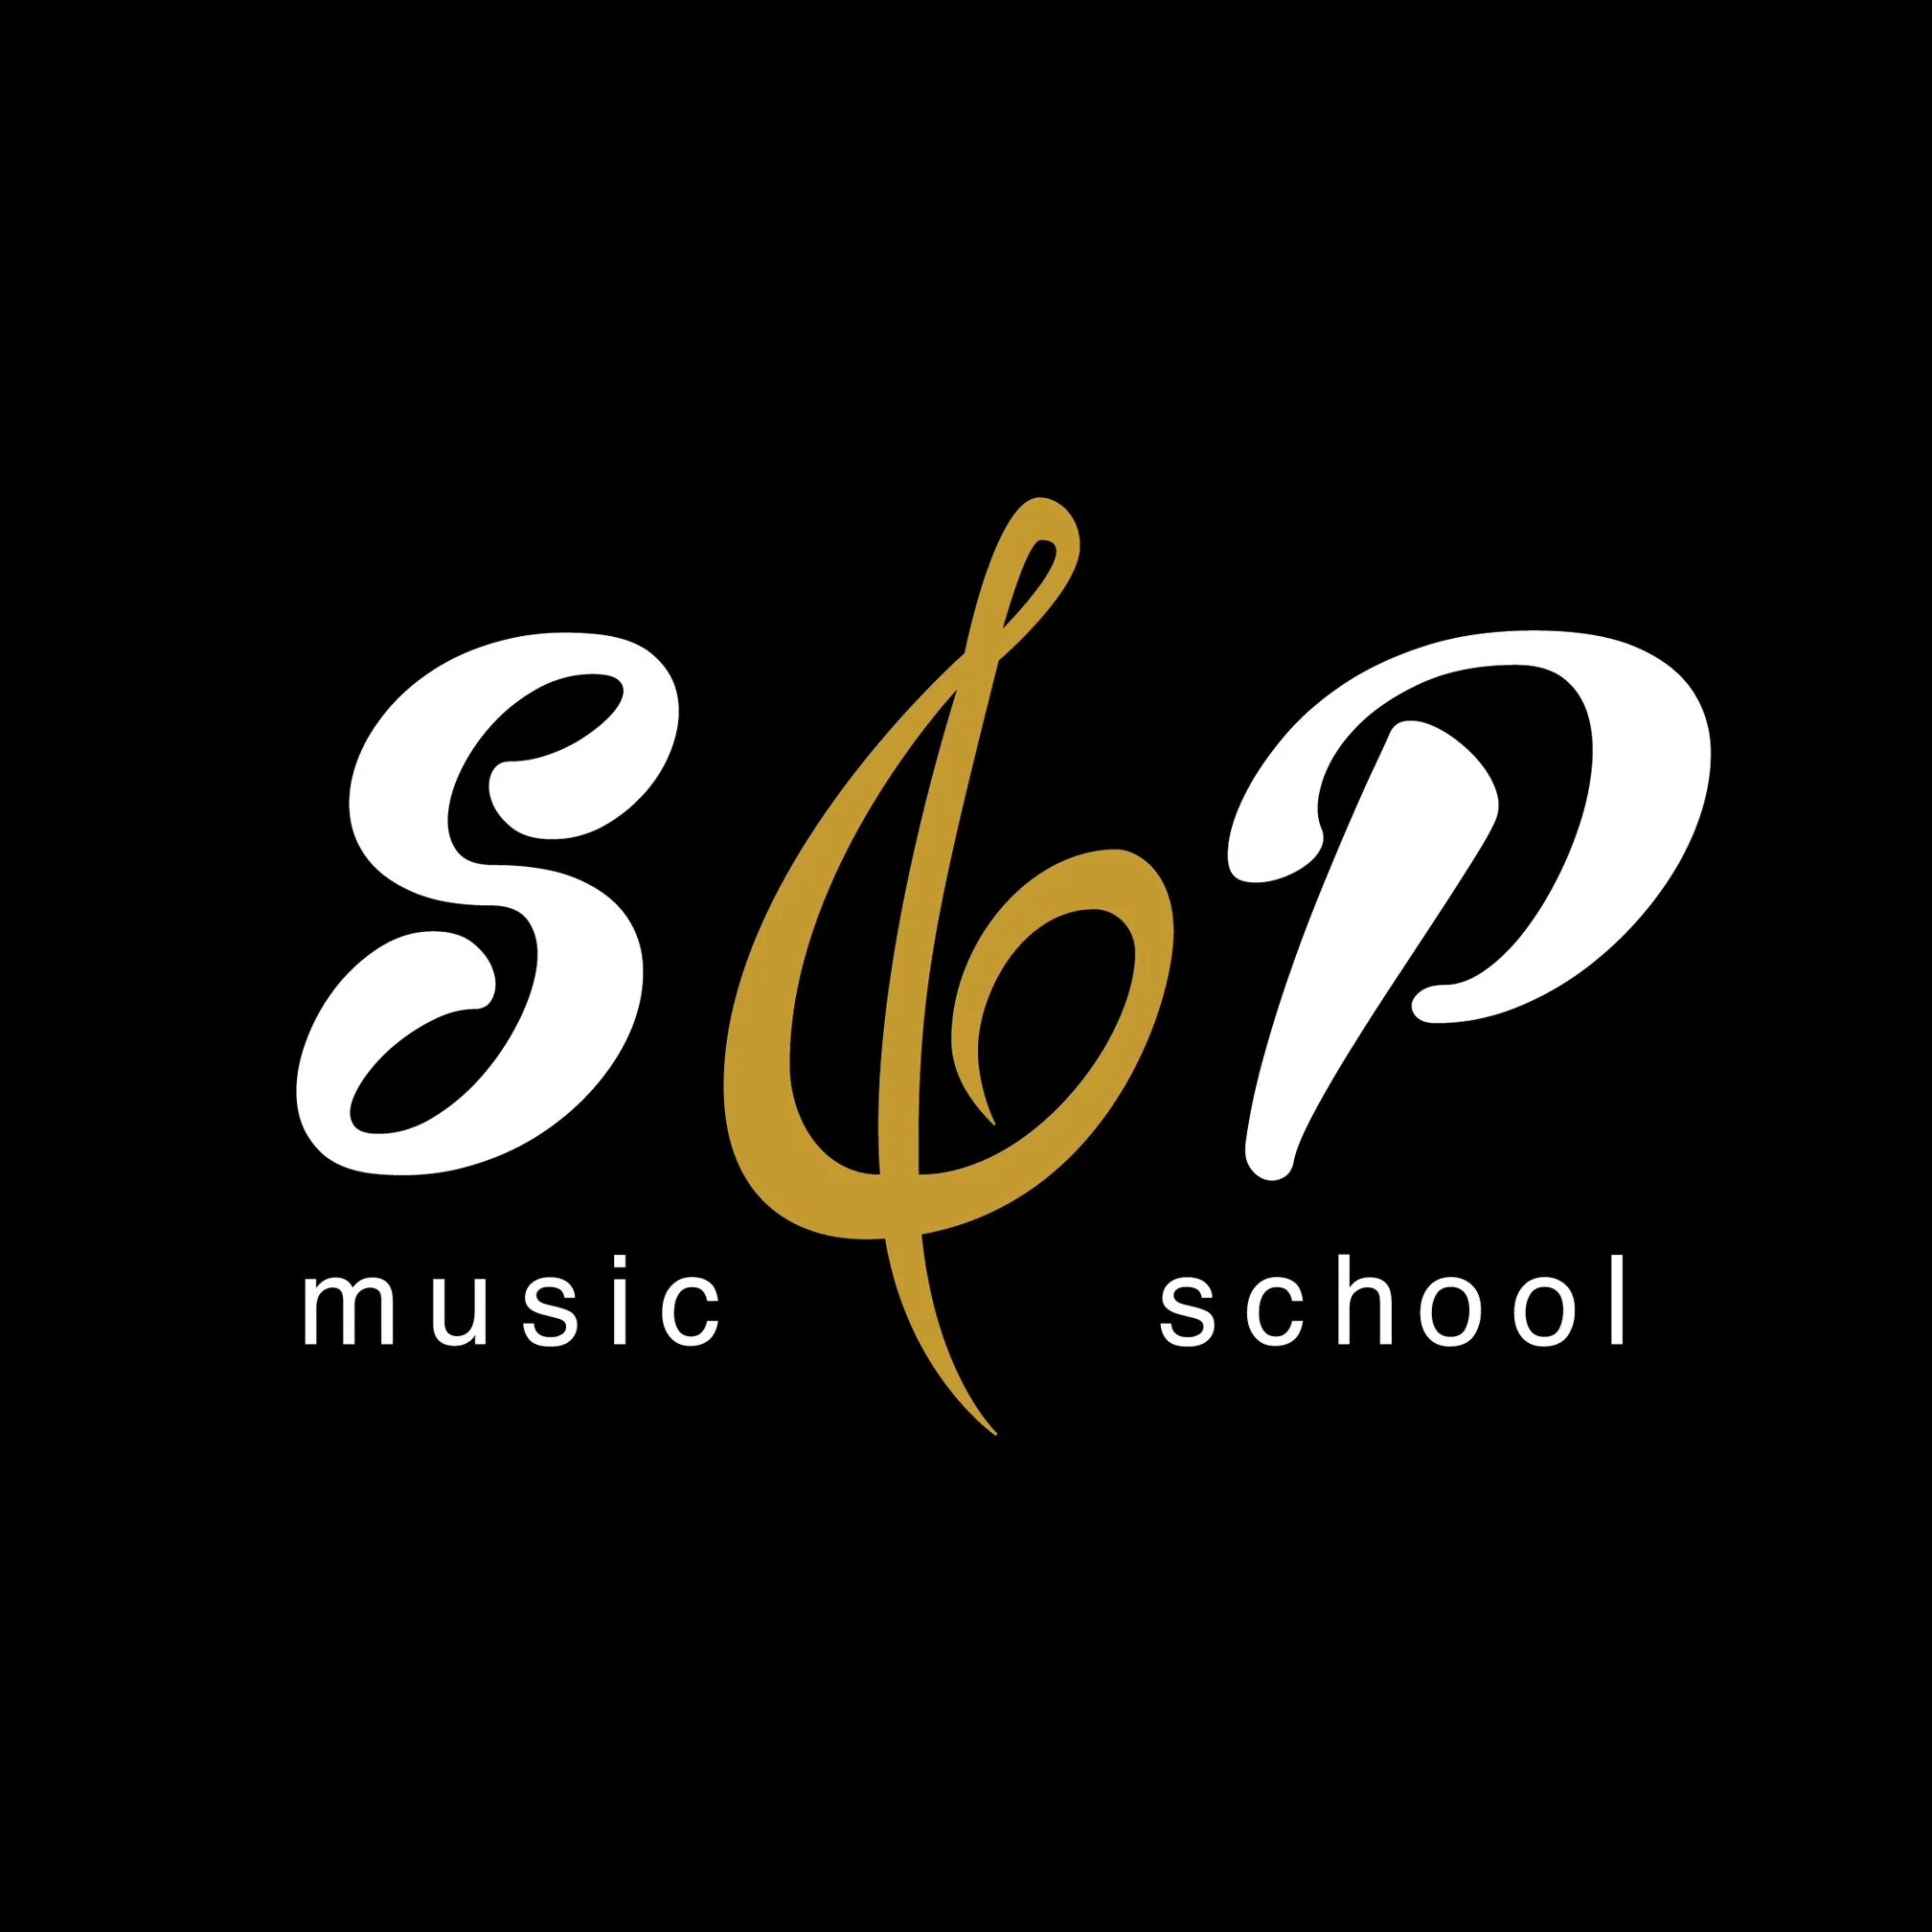 Play and Sing. School Sing Sing. M Musical School logo.